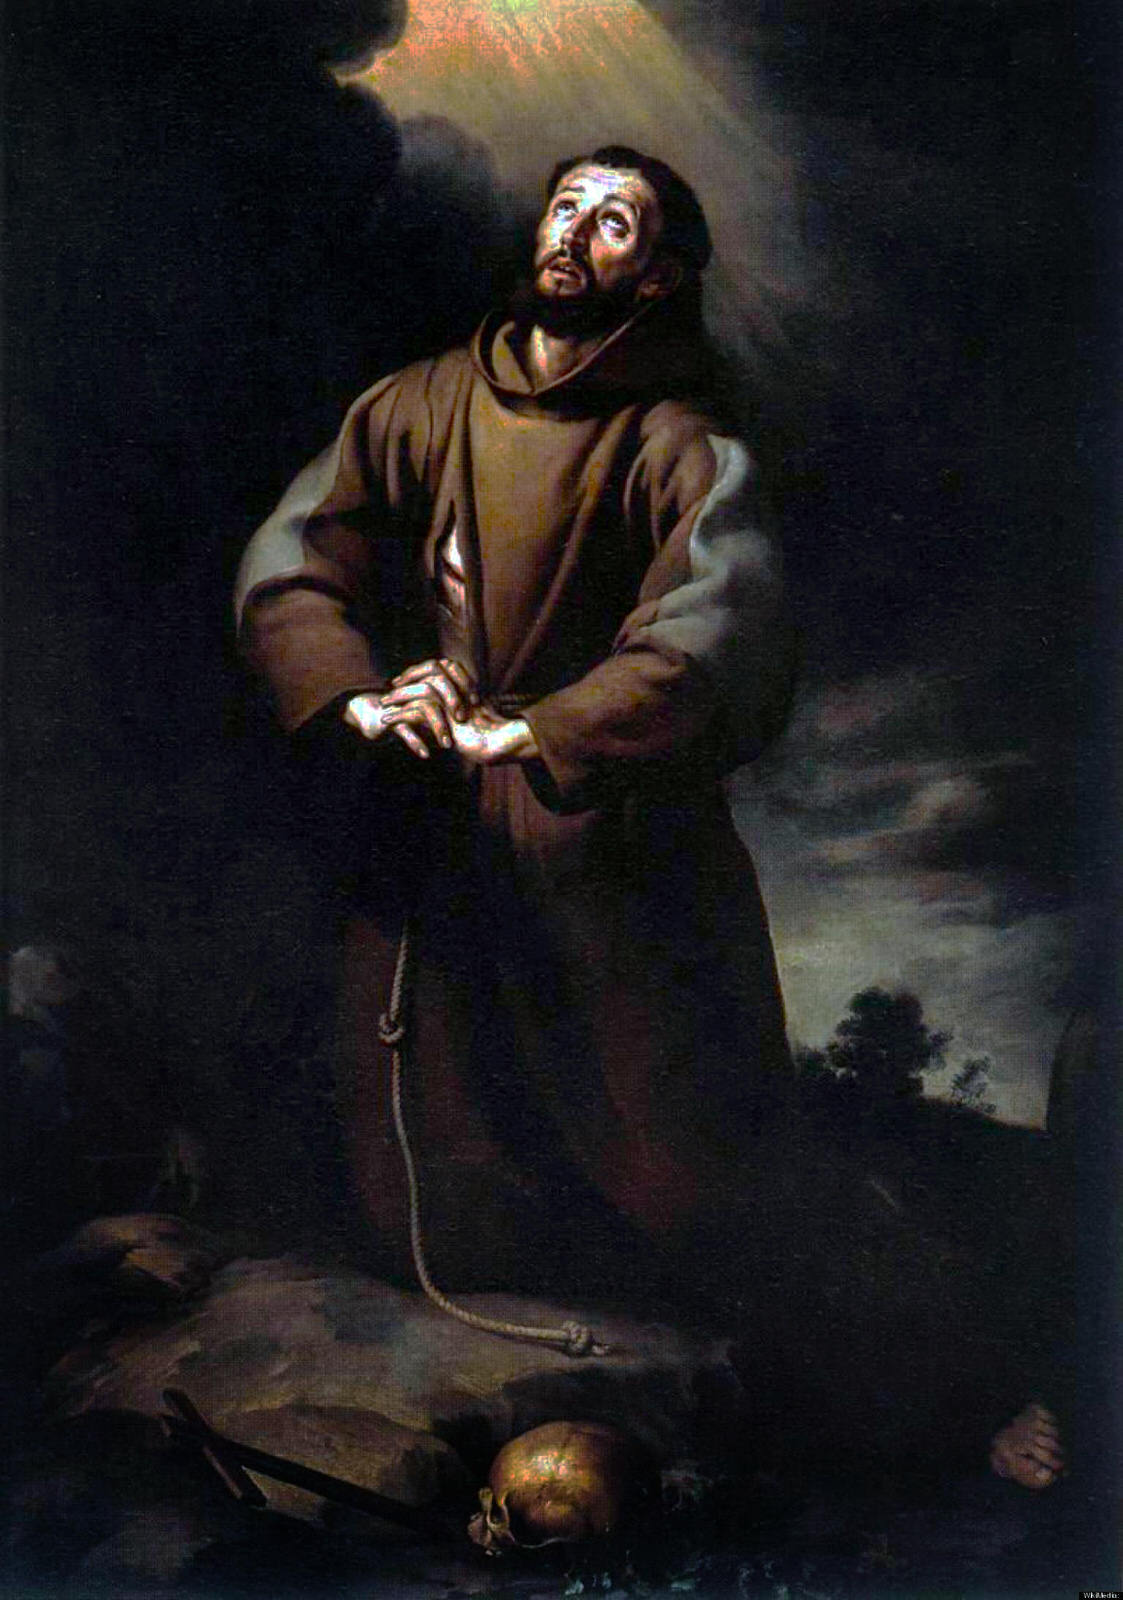 Saint Francis at Prayer